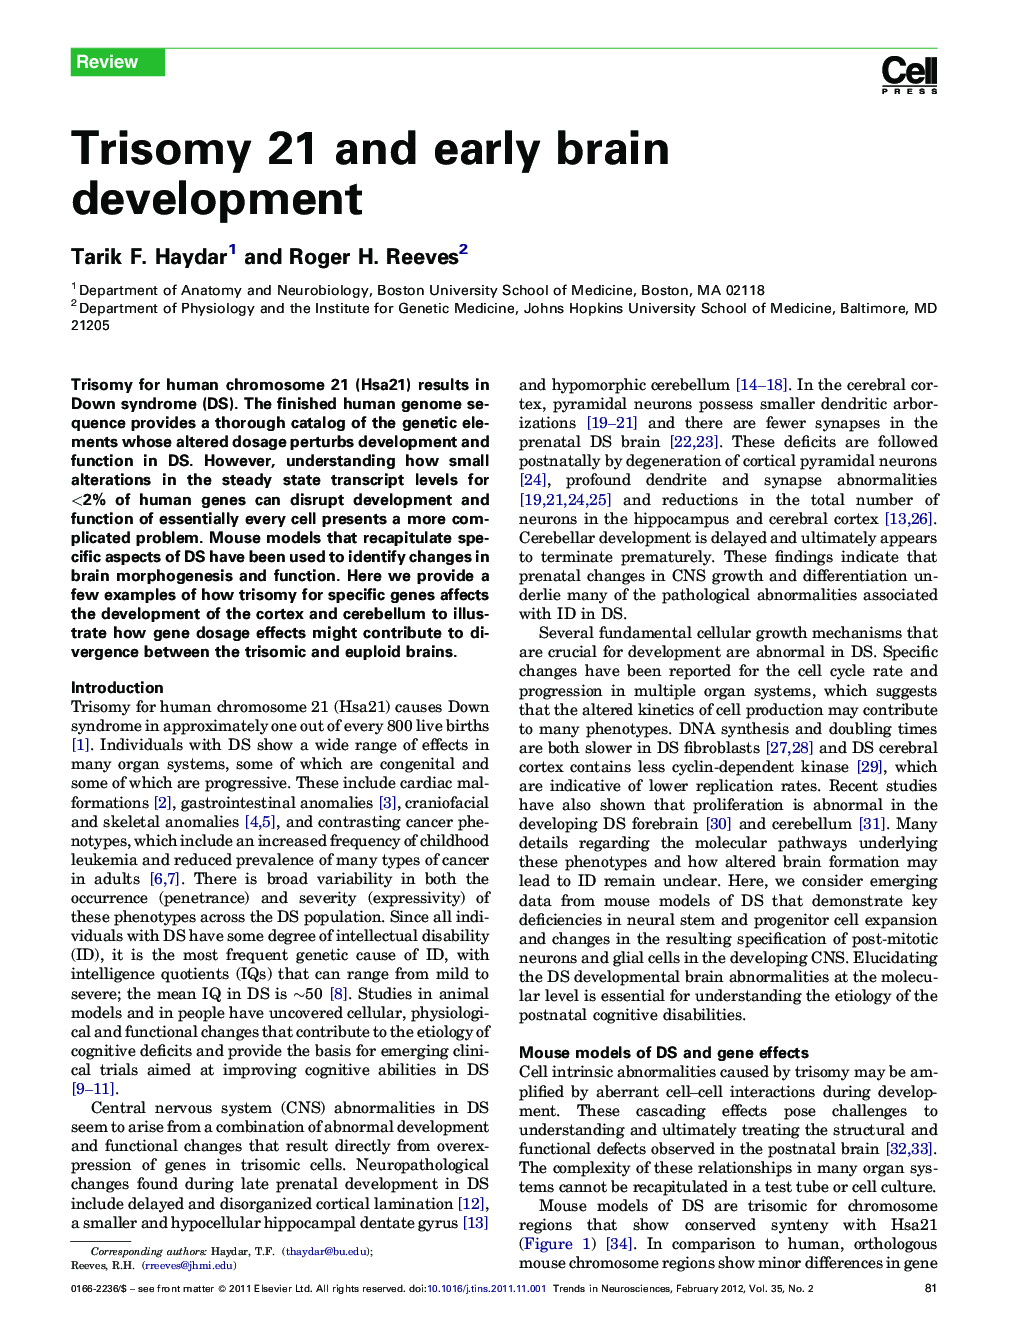 Trisomy 21 and early brain development